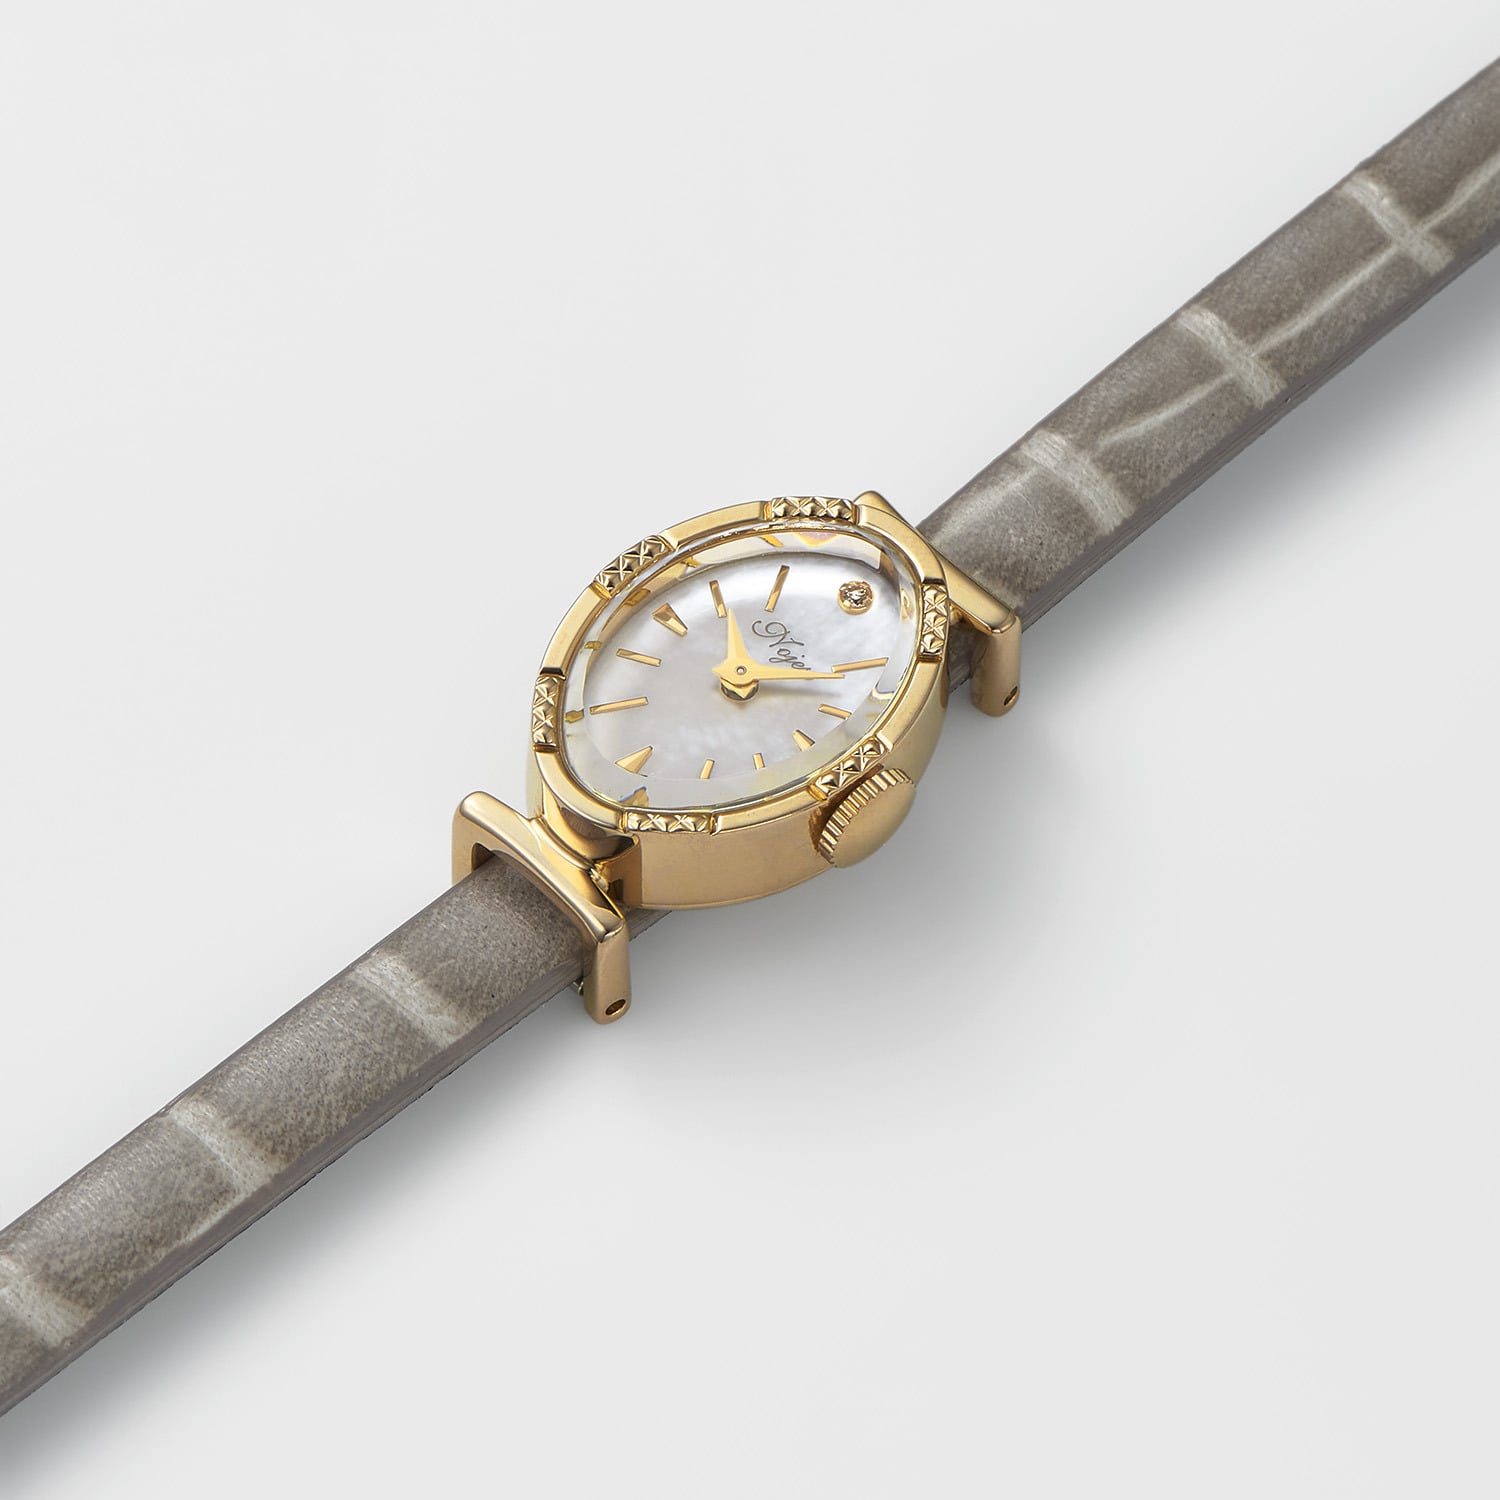 eteノジェス 腕時計 ブリレ ※出品内容に変更あり - 金属ベルト